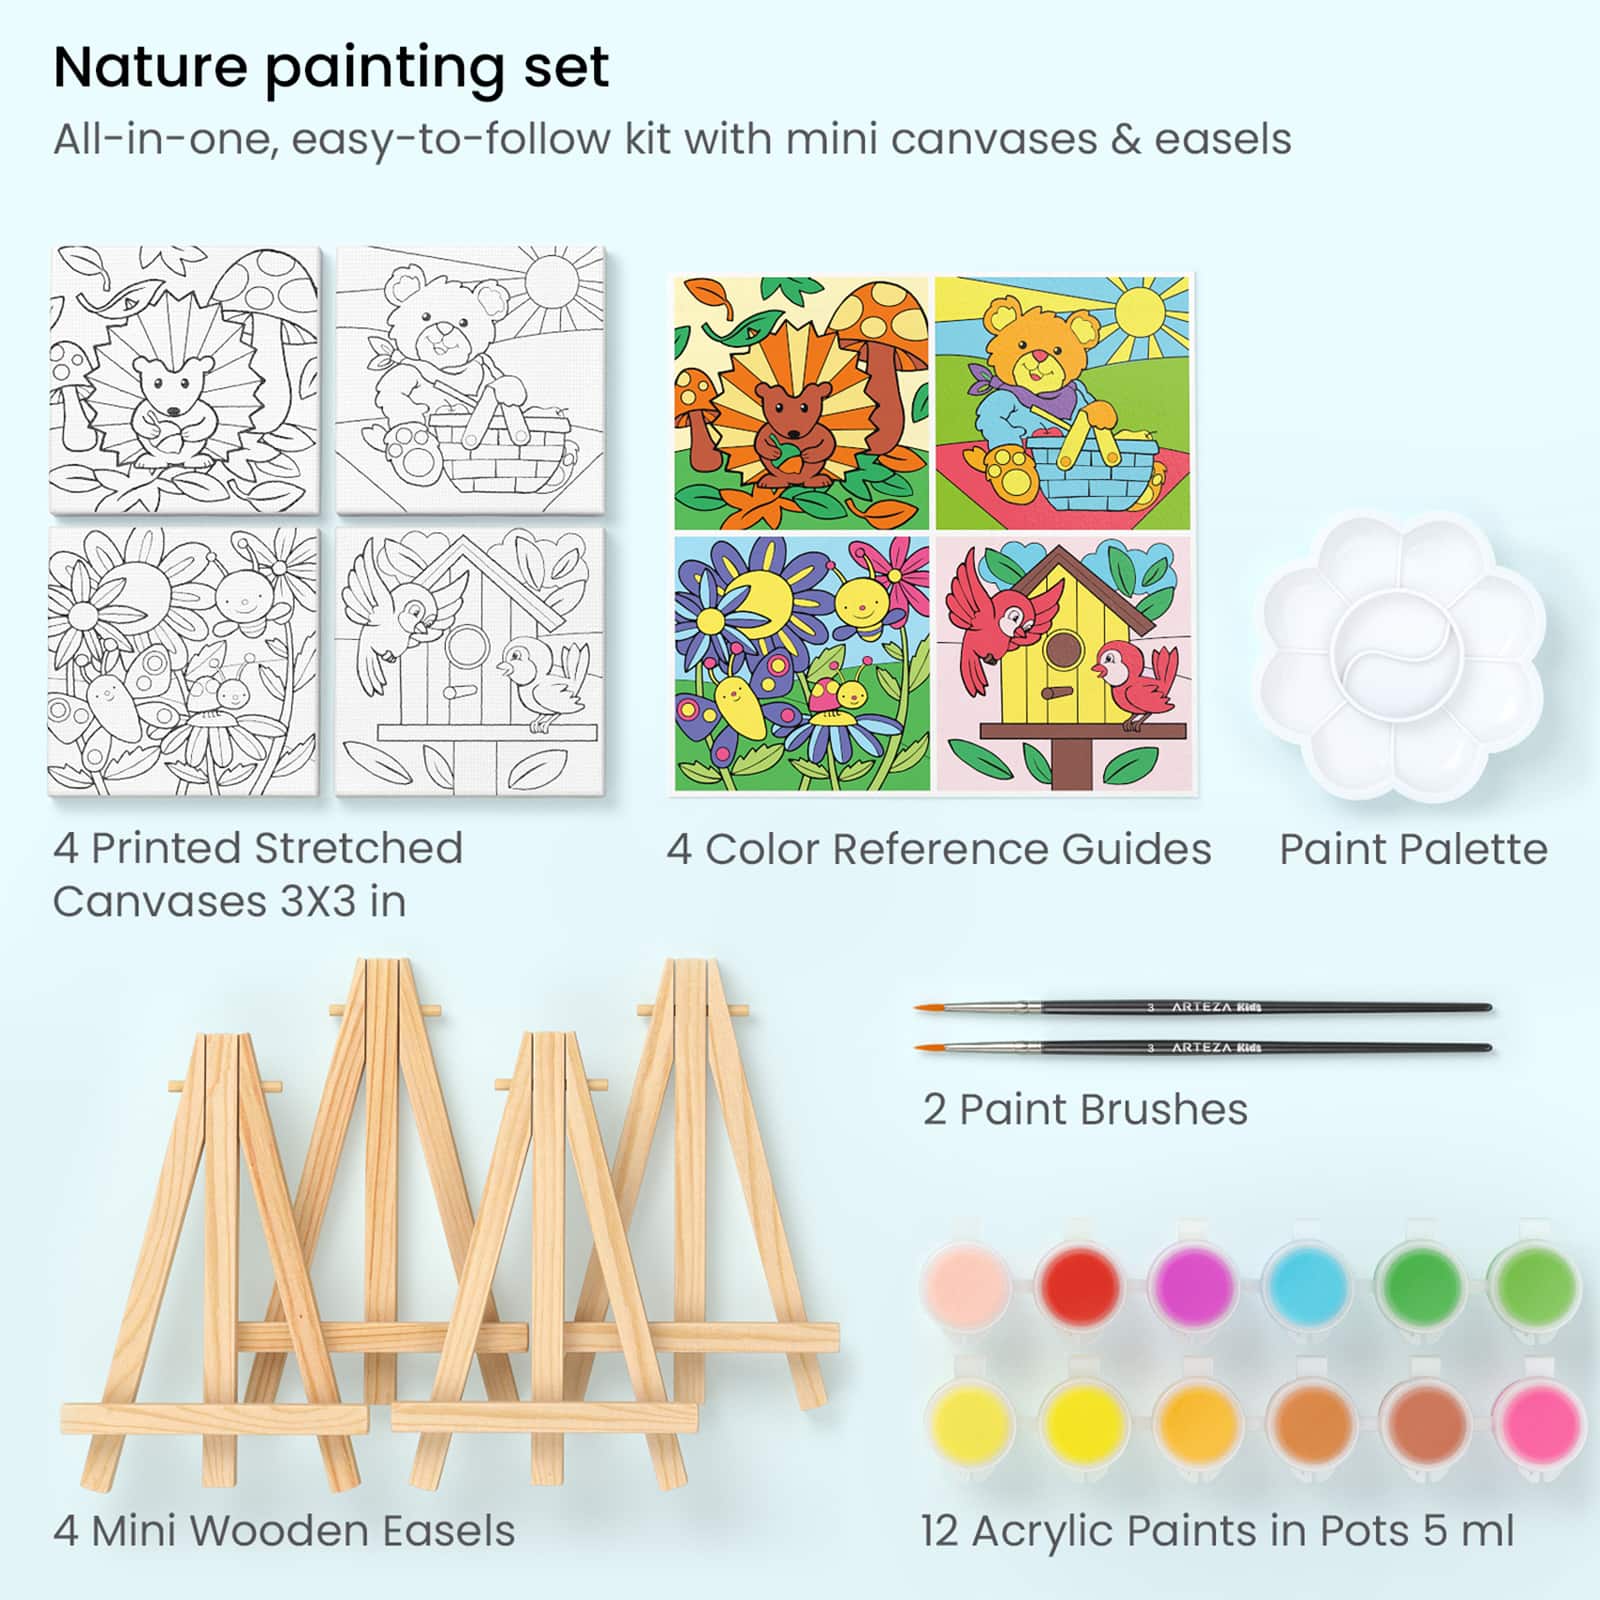 Arteza&#xAE; Kids Canvas Paint Kit, 4 Mini Canvas- 3 x 3 with Easel, Nature